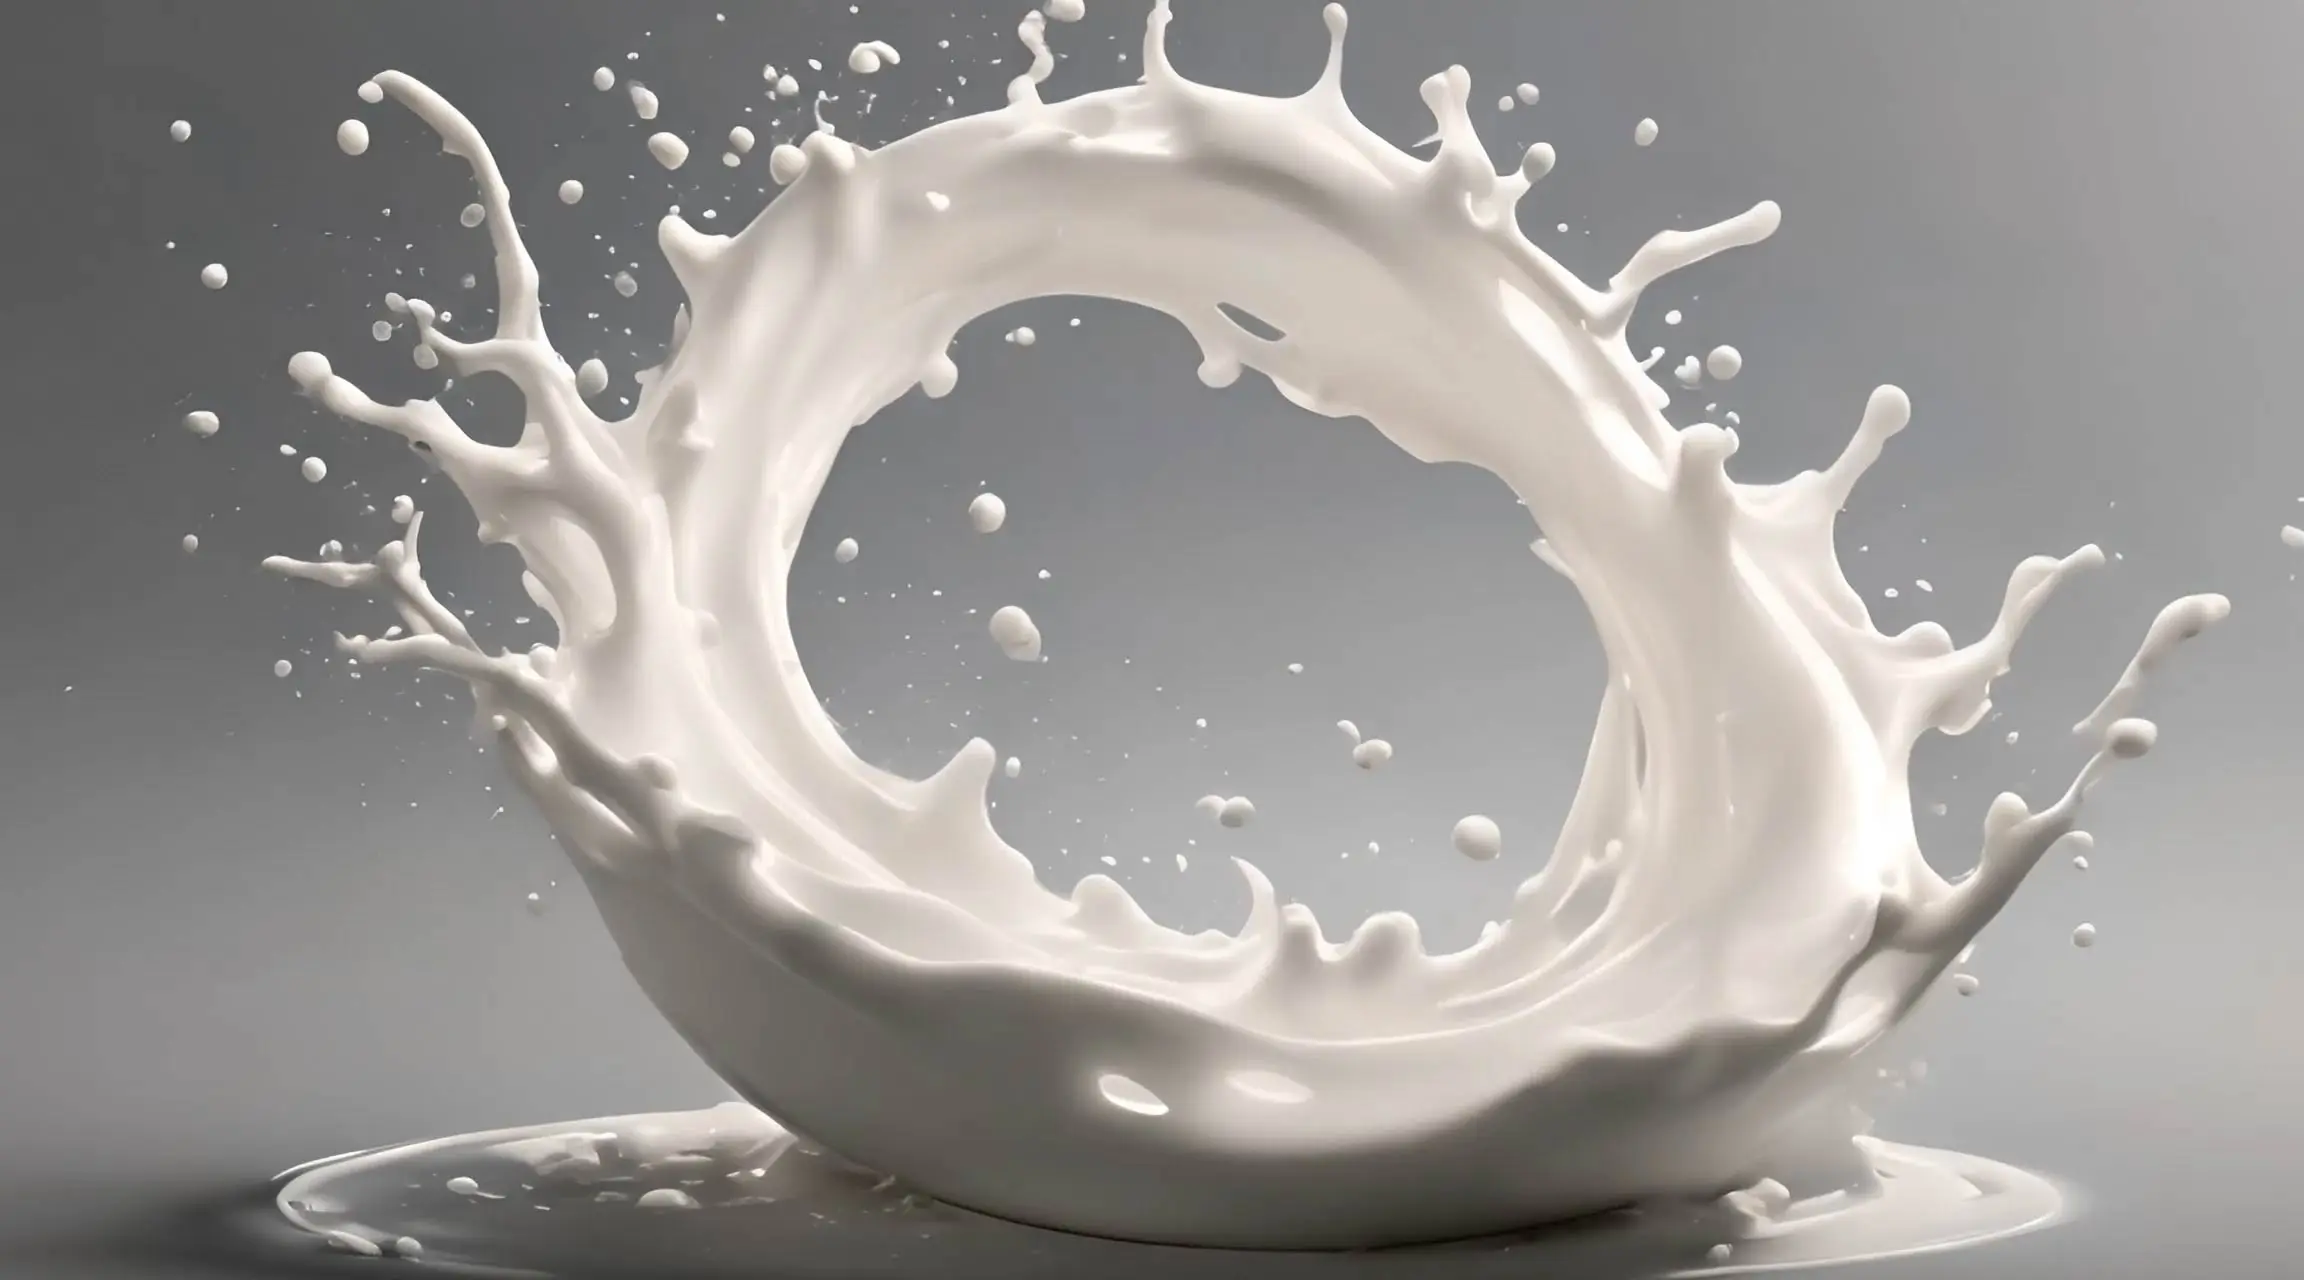 Milk Circle Splash Blast Motion Graphic